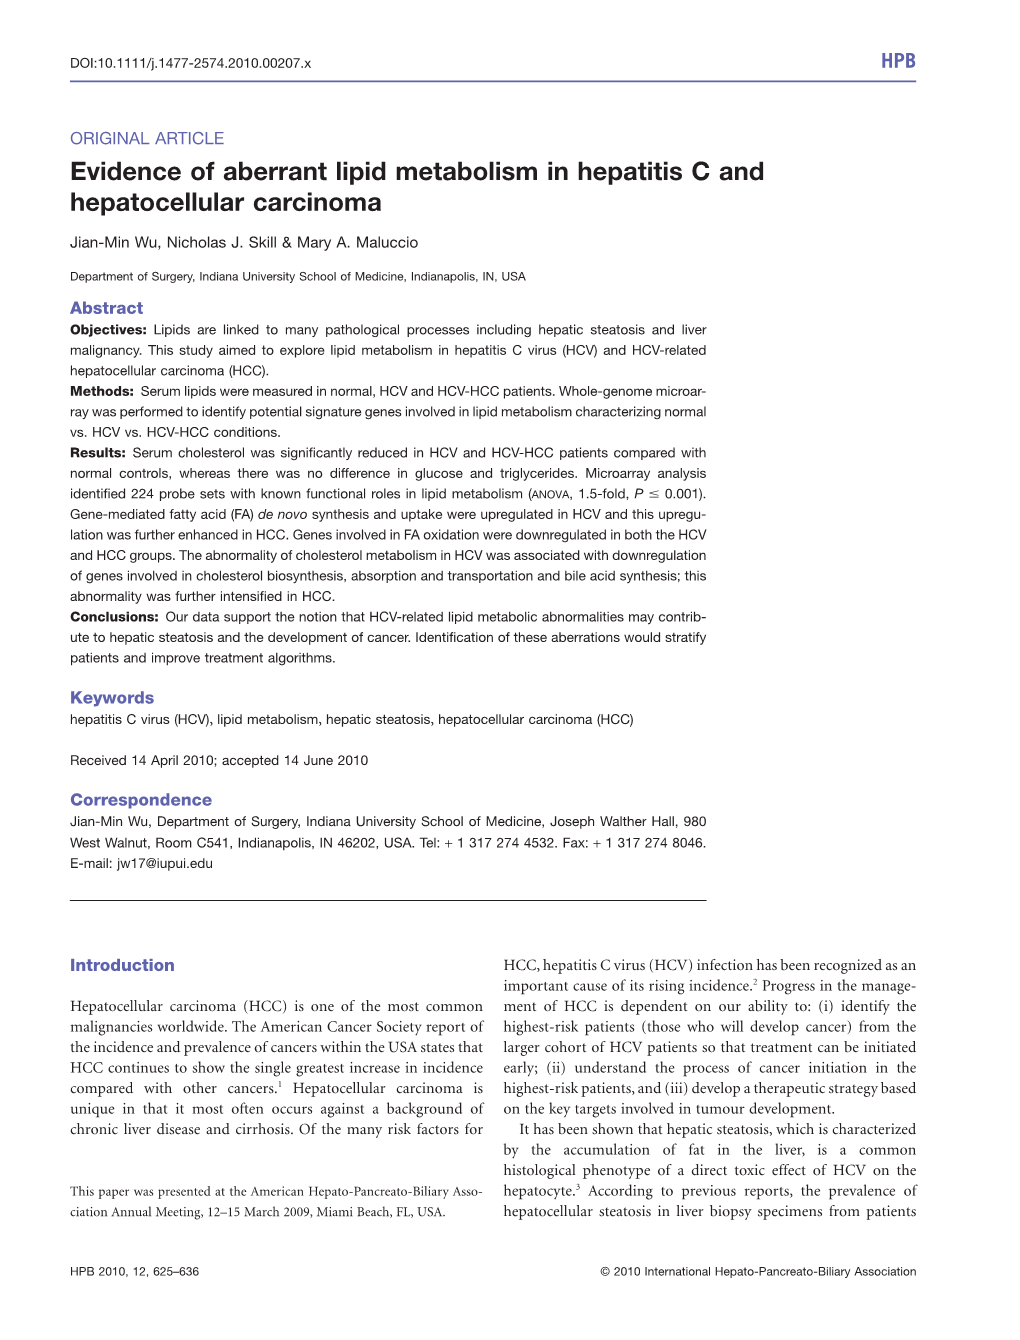 Evidence of Aberrant Lipid Metabolism in Hepatitis C and Hepatocellular Carcinoma